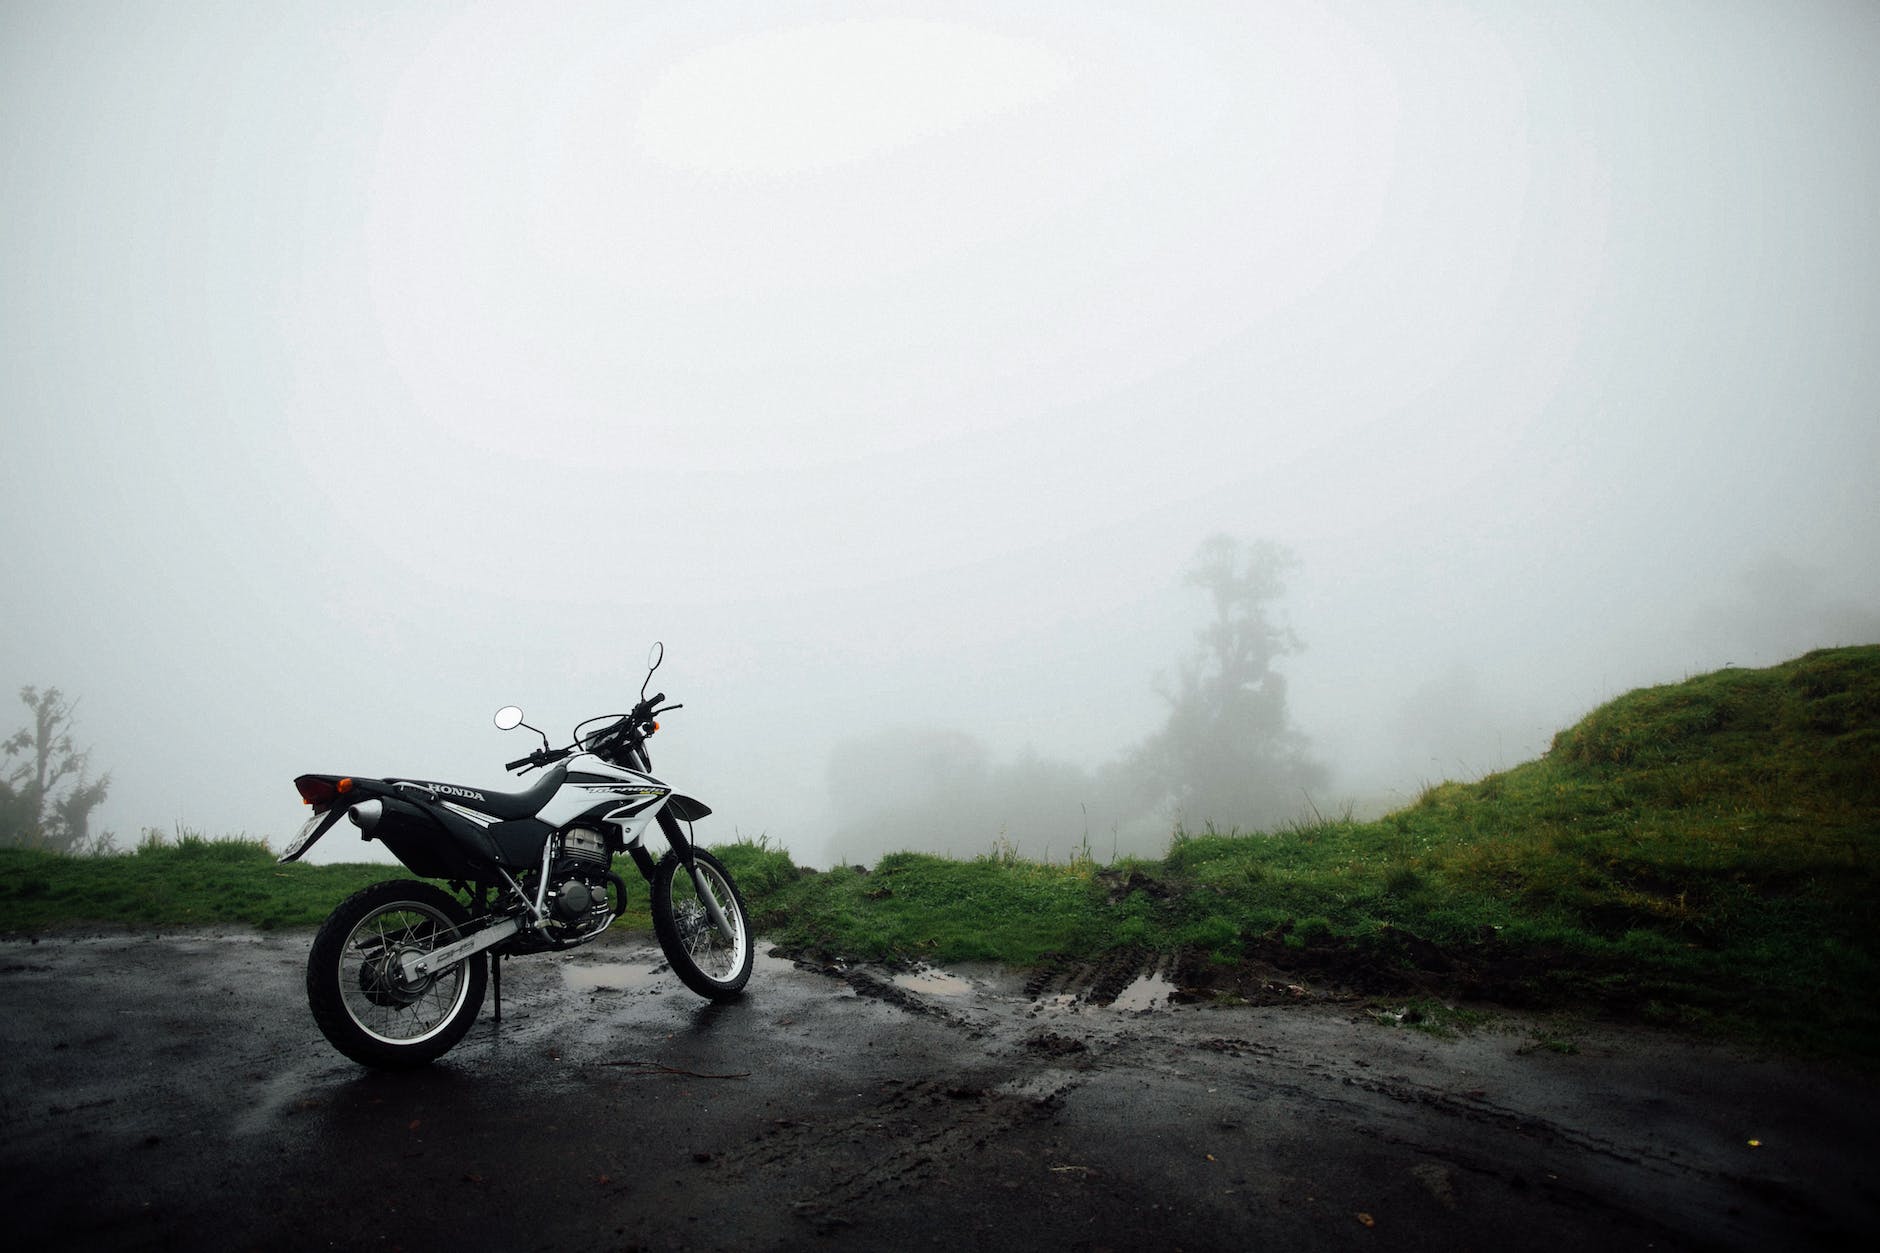 honda motorcycle parked near green field